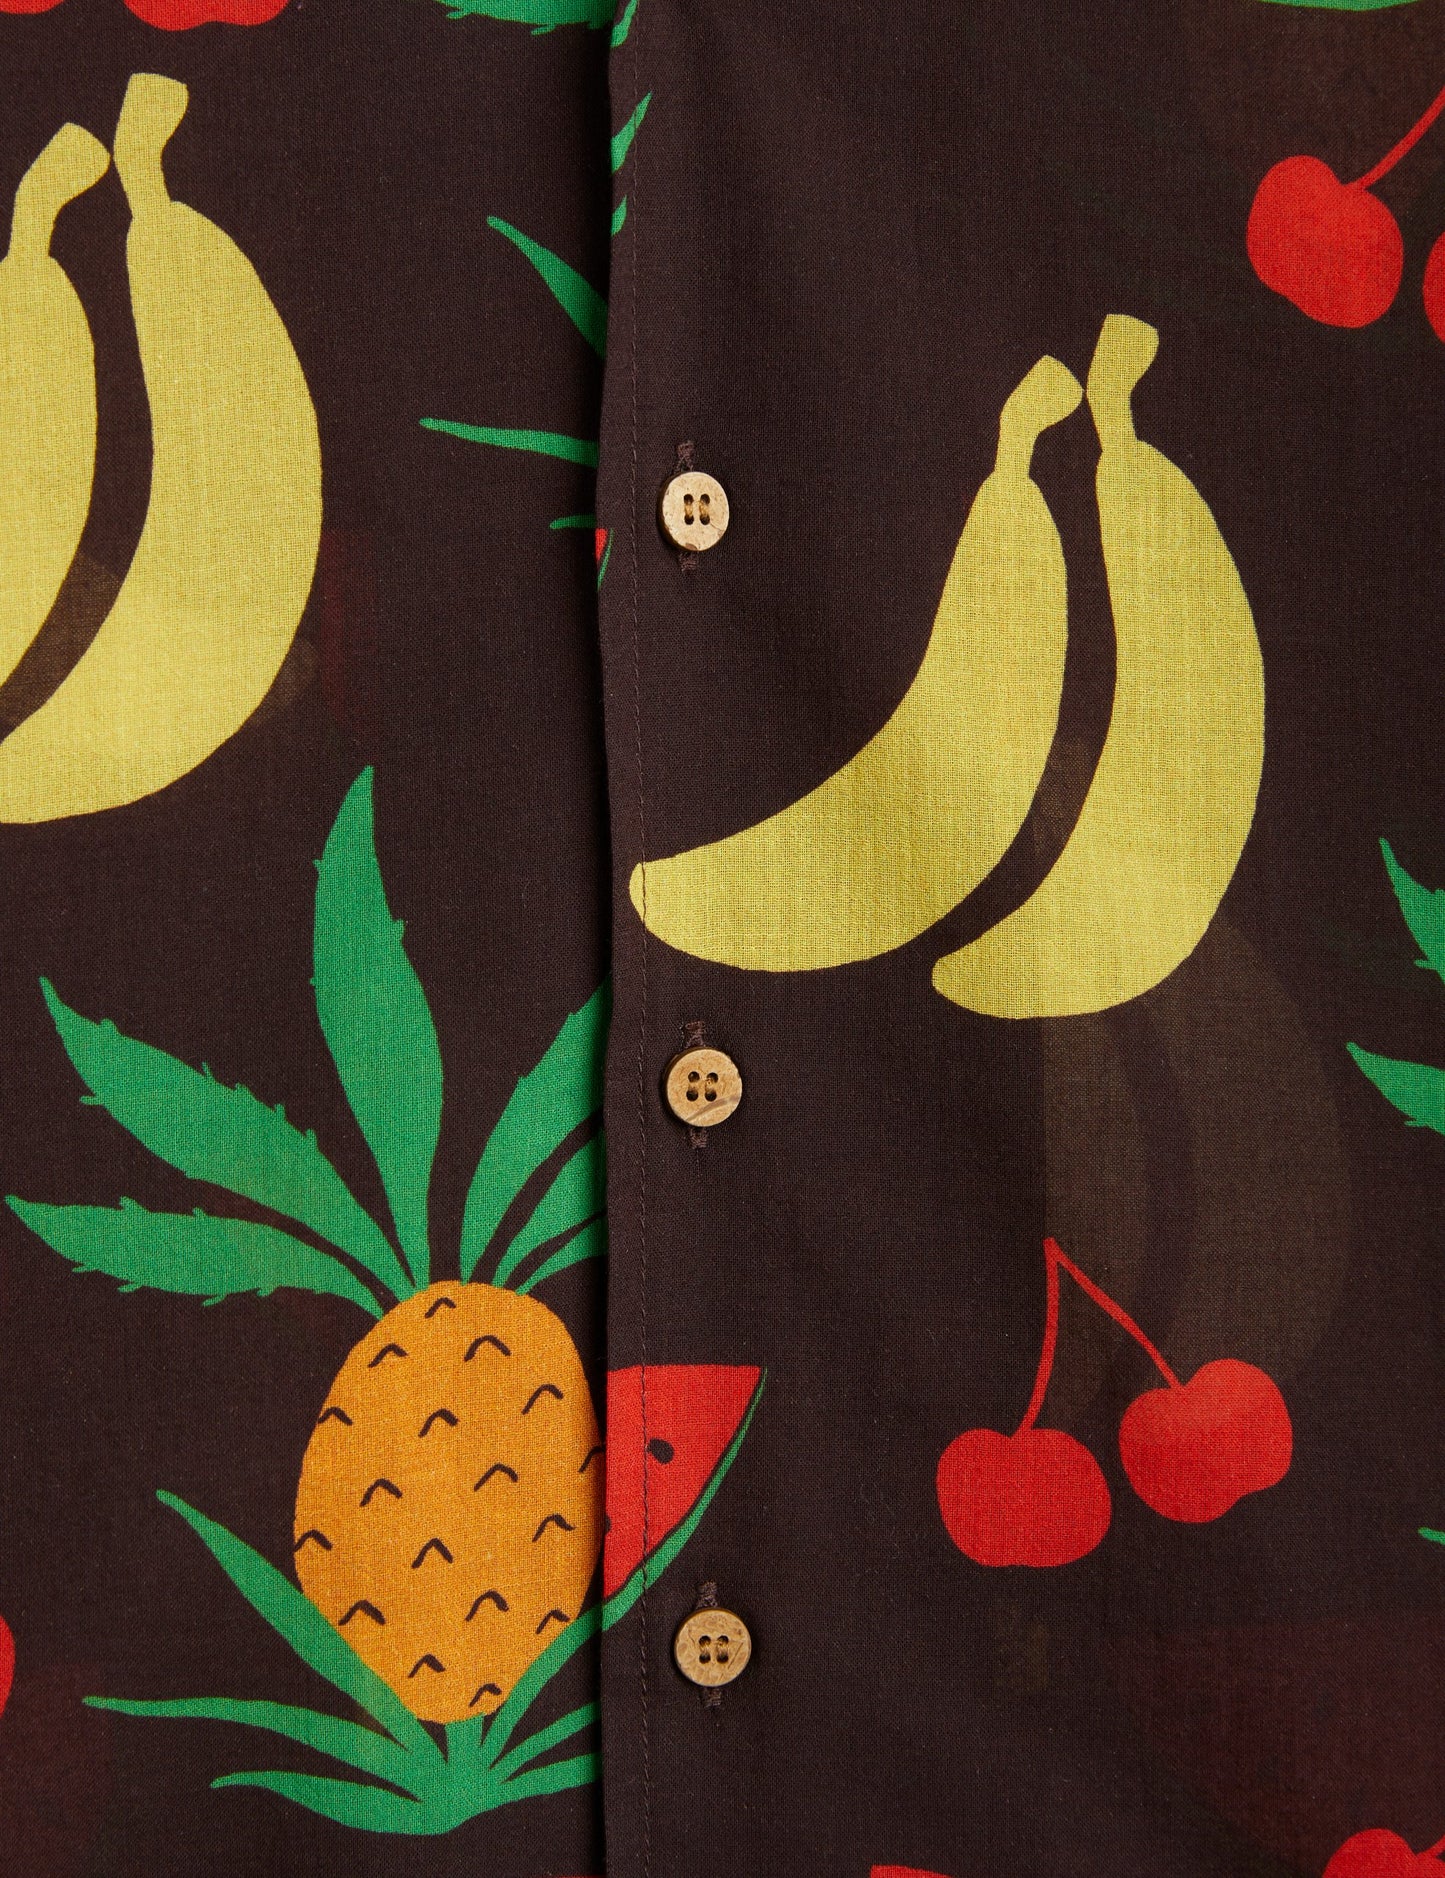 Fruits woven shirt